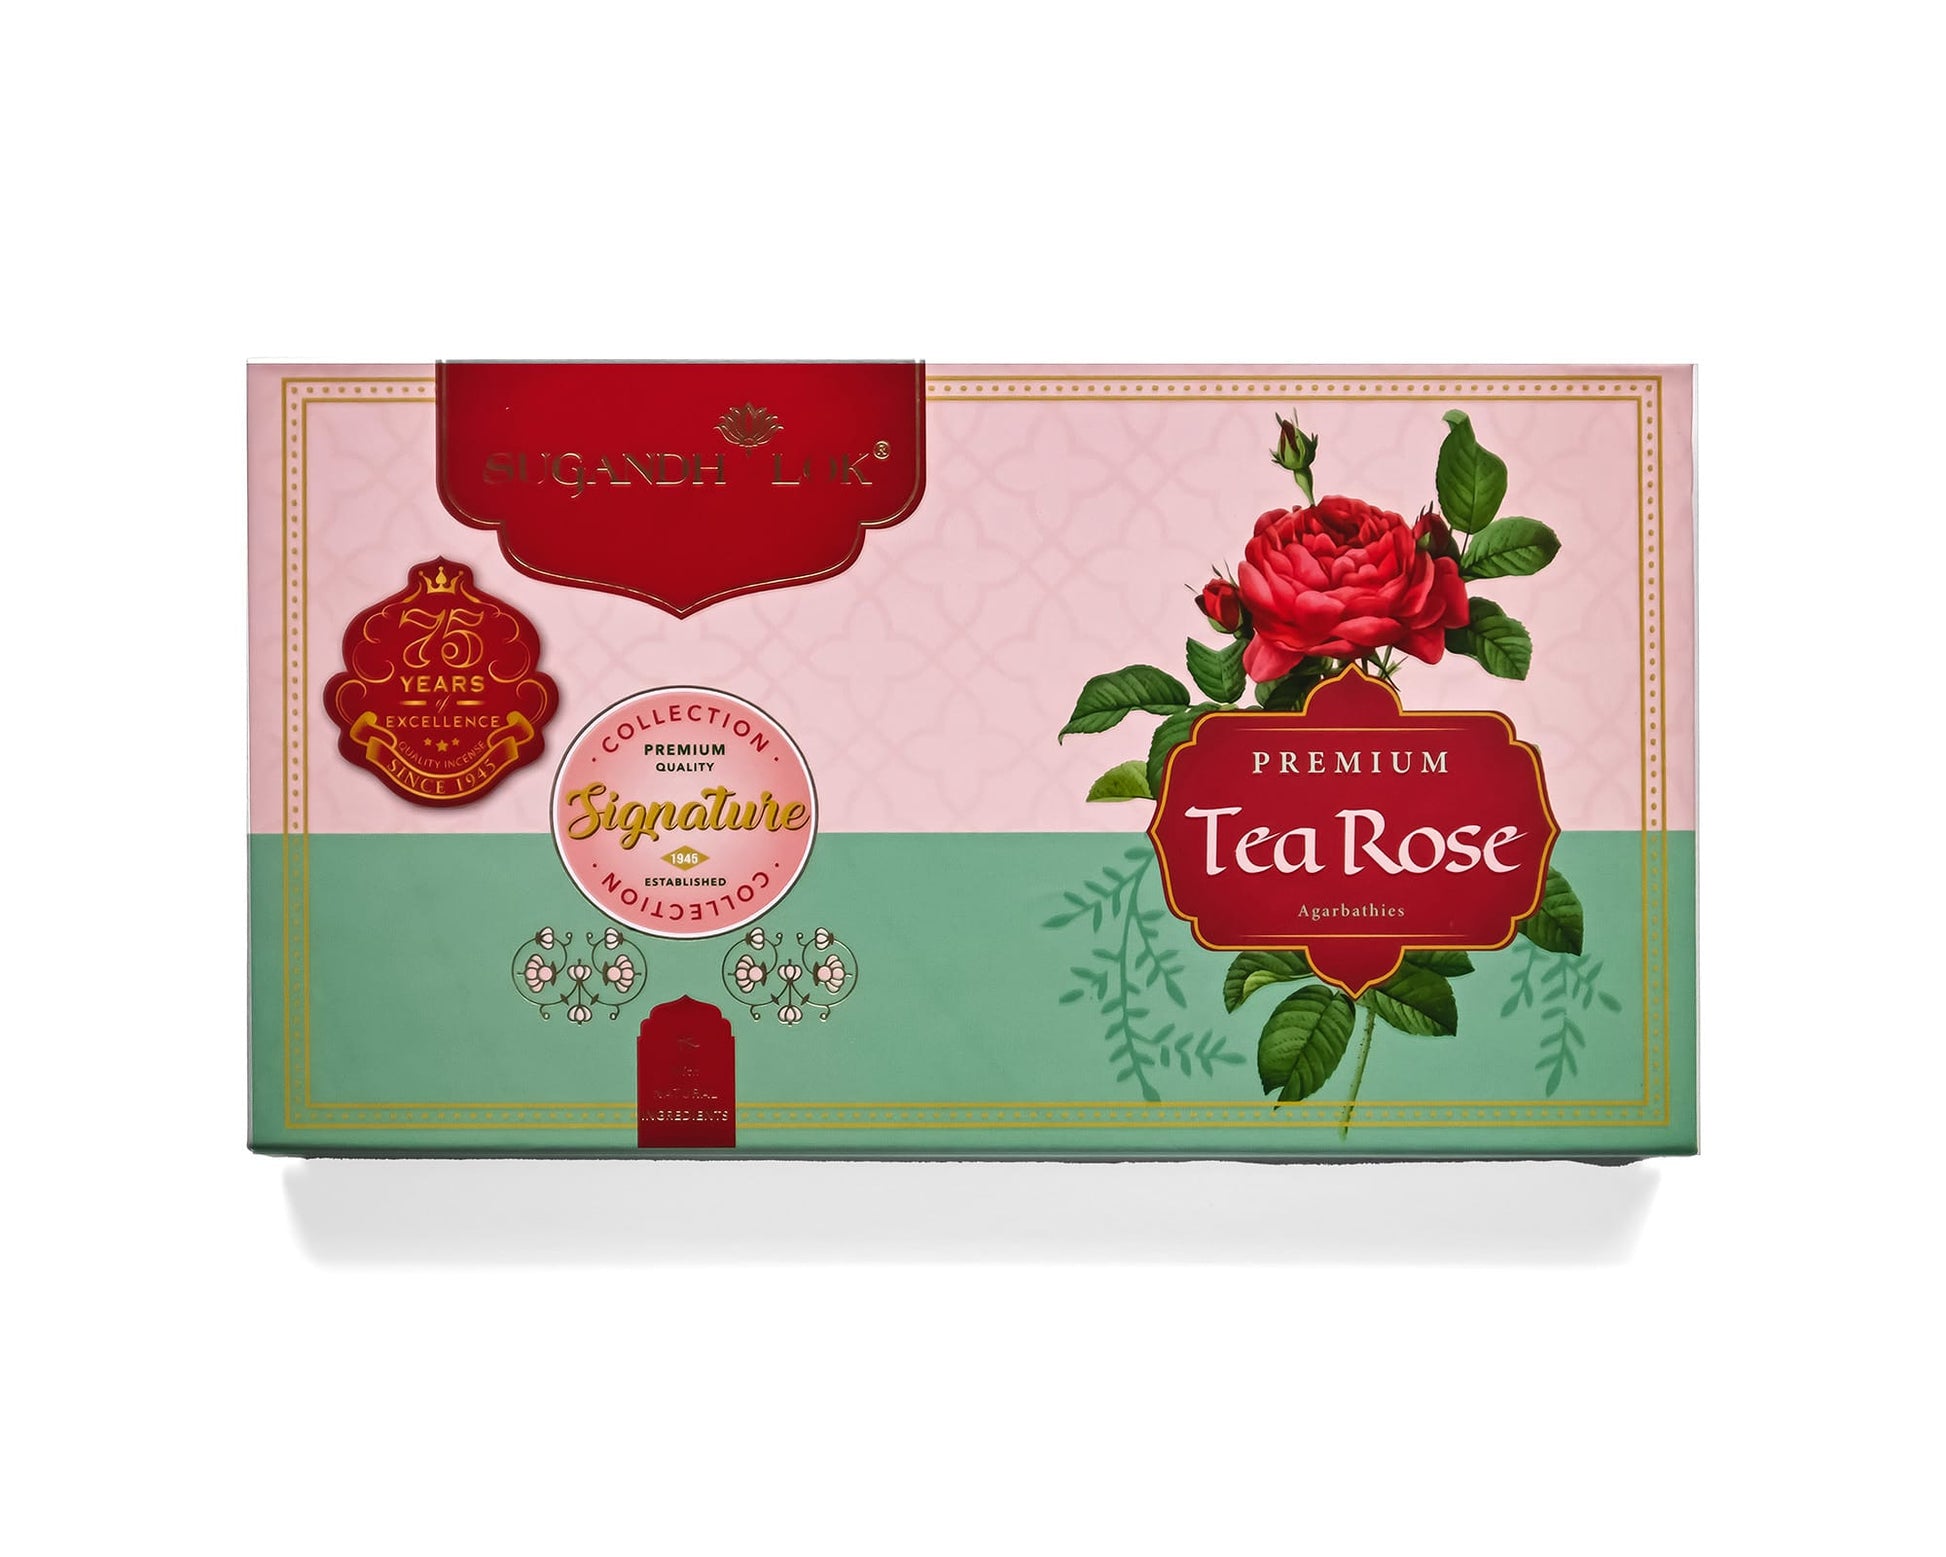 Premium Tea Rose Agarbatti Box by SugandhLok